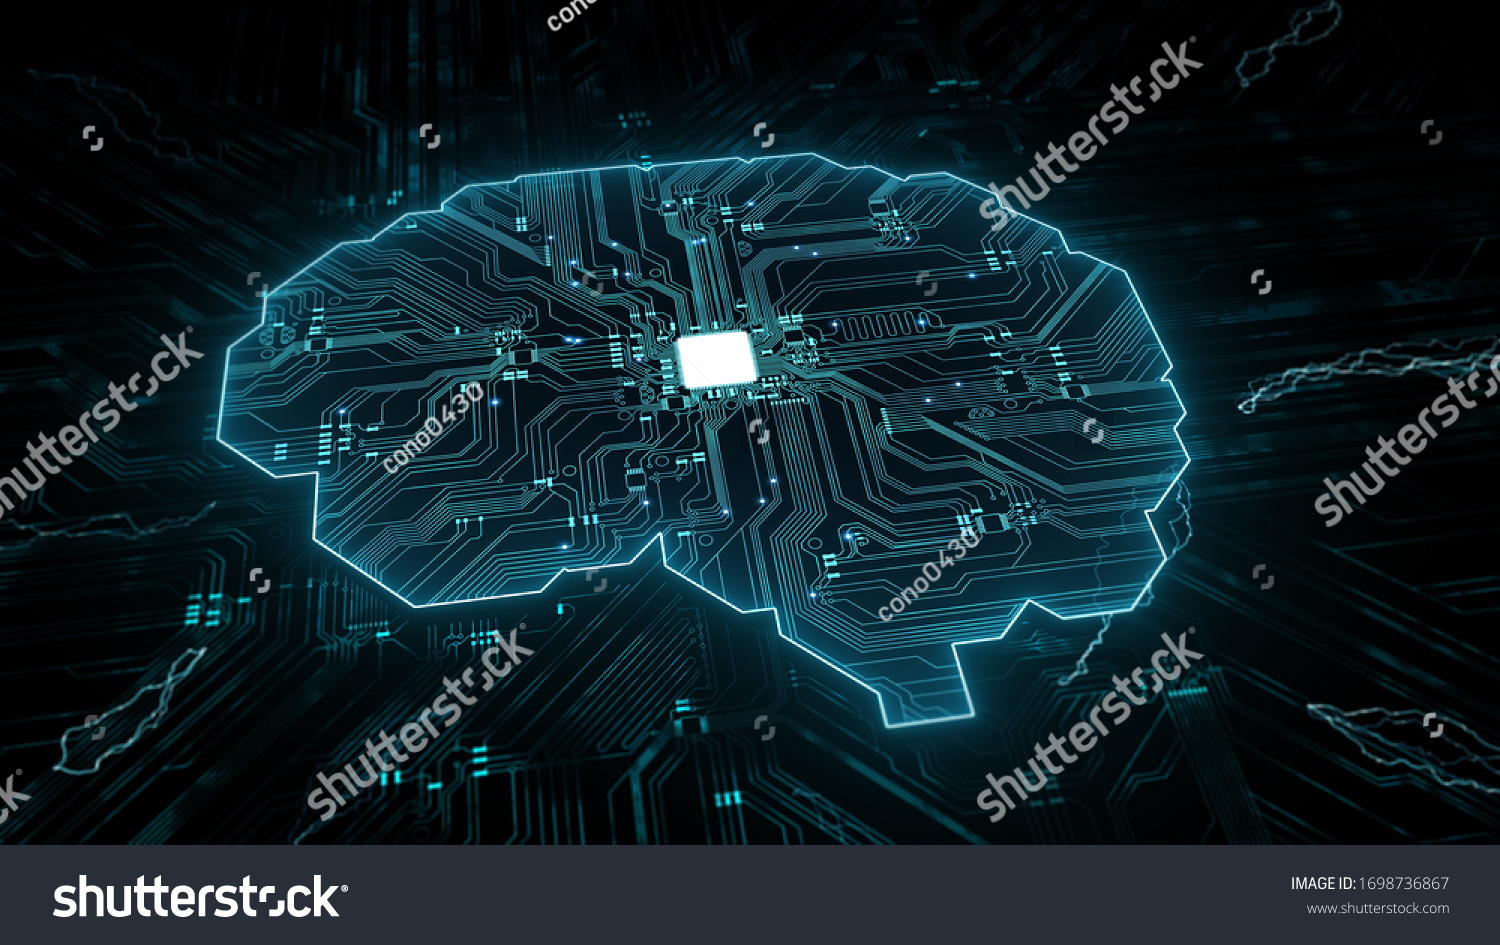 Artificial intelligence (AI), data mining, deep learning modern computer technologies. 
Futuristic Cyber Technology Innovation. 
Brain representing artificial intelligence with printed circuit board ( #1698736867